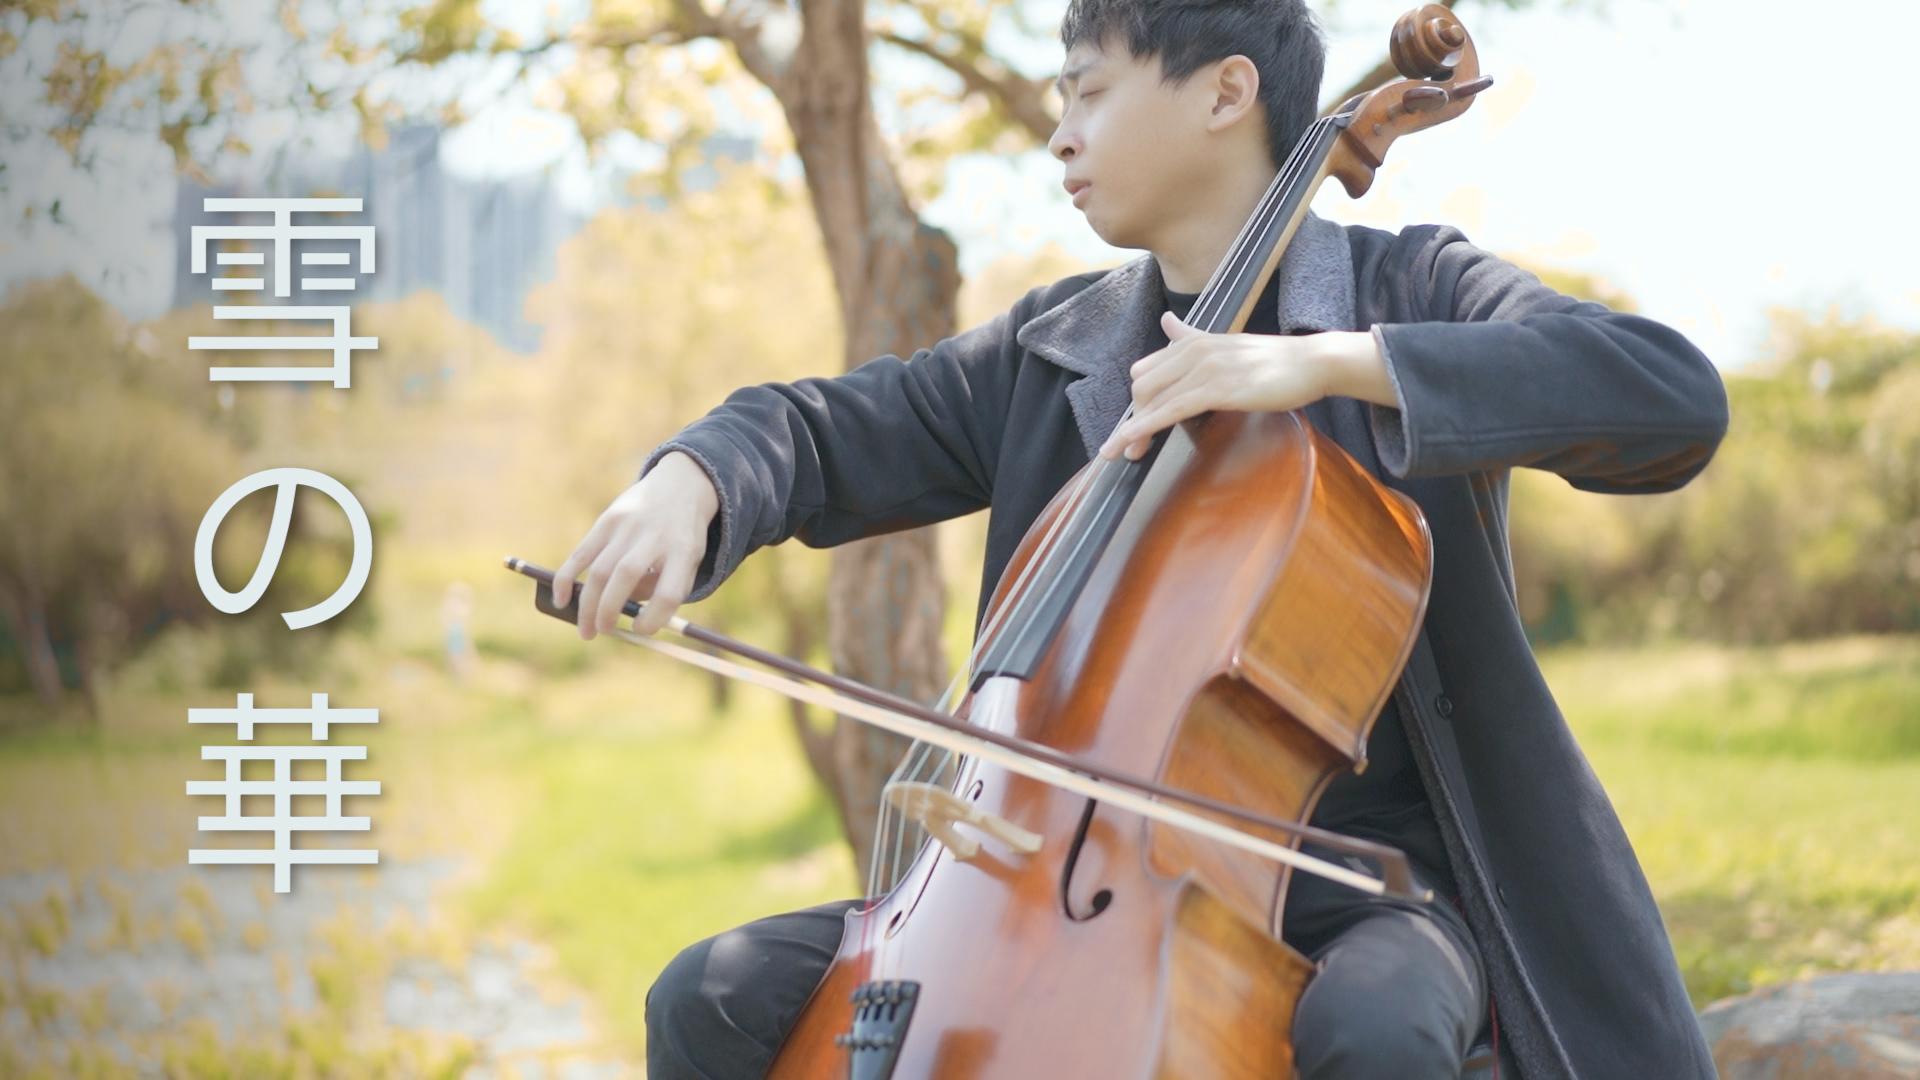 雪の華《雪花》 - 中島美嘉  cello cover 大提琴演奏『cover by YoYo Cello』